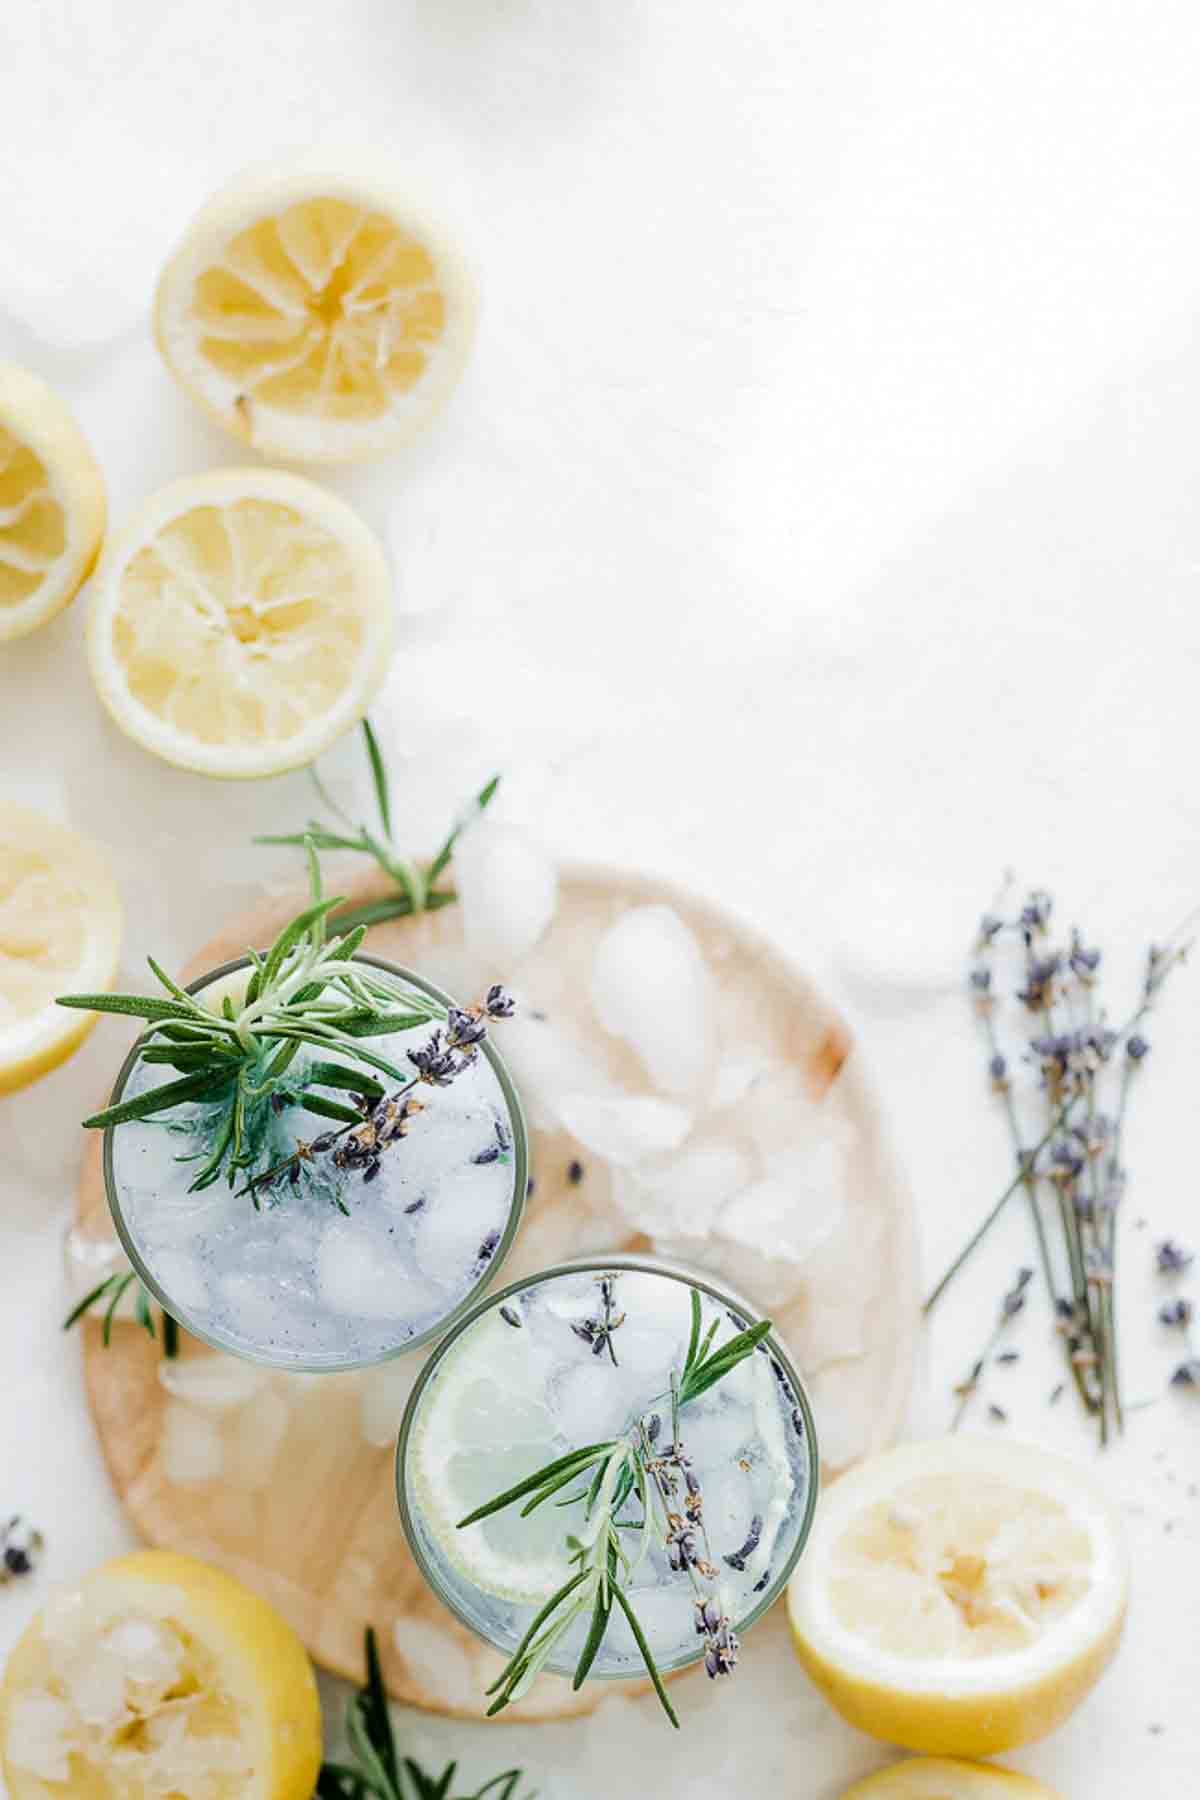 Glasses of homemade lavender lemonade on the table with fresh herbs and lemons.